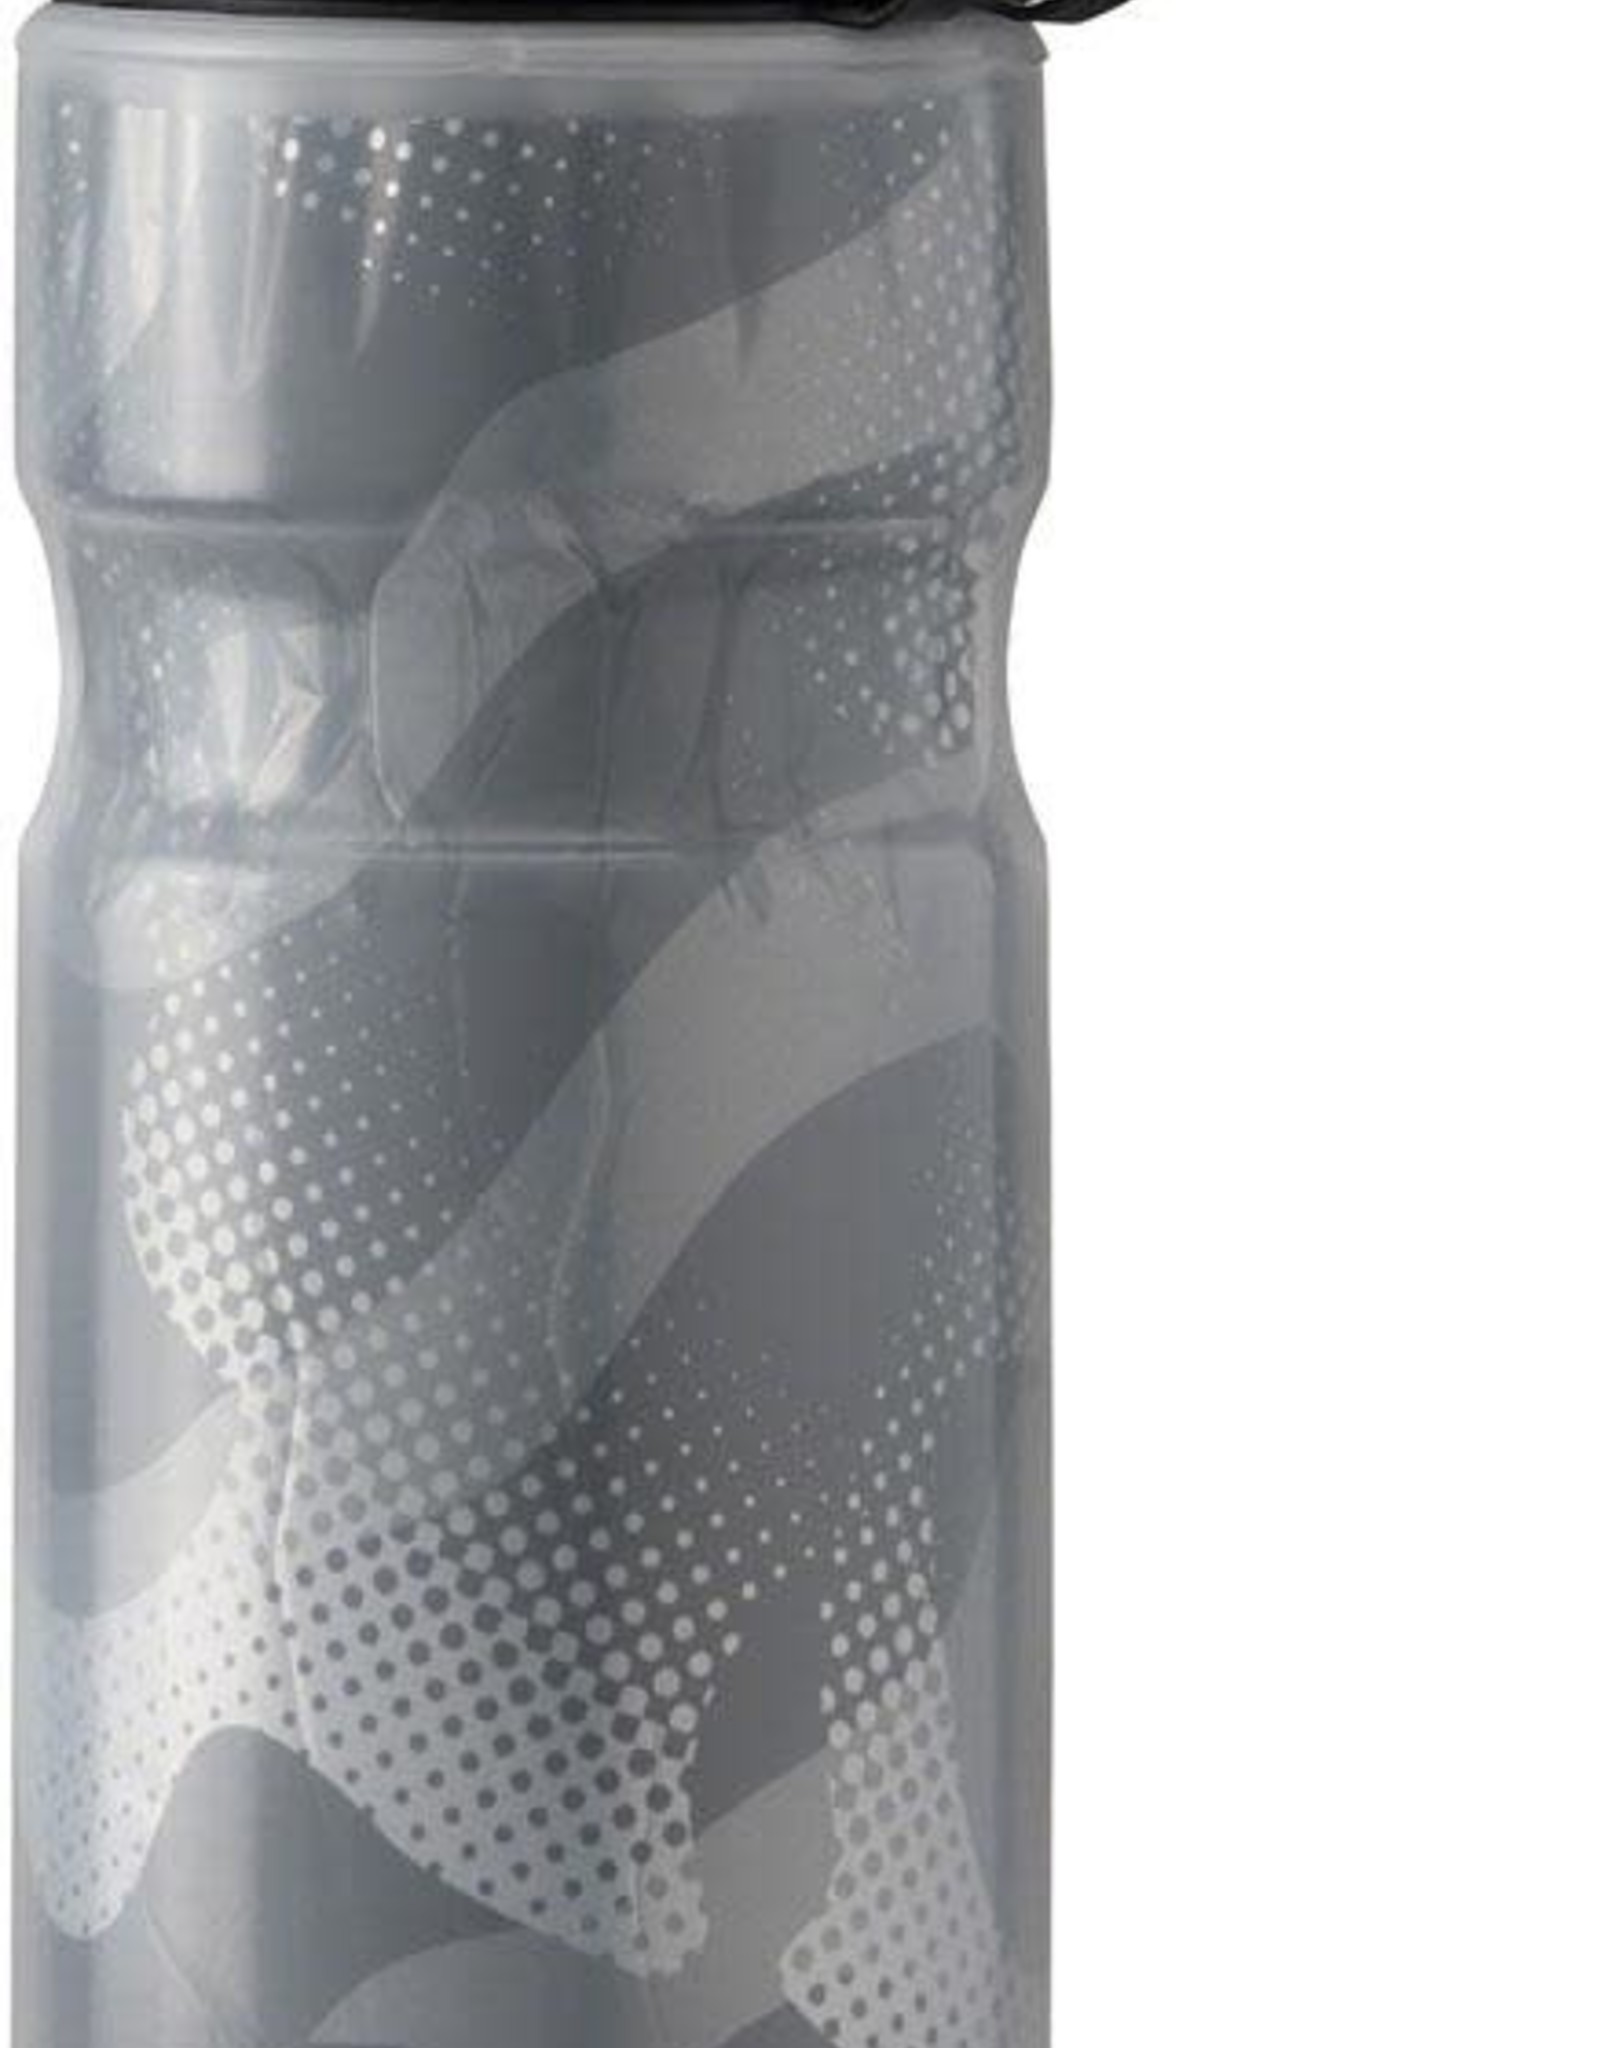 Polar Bottles Sport Contender Insulated Water Bottle - 20oz, Charcoal/Silver